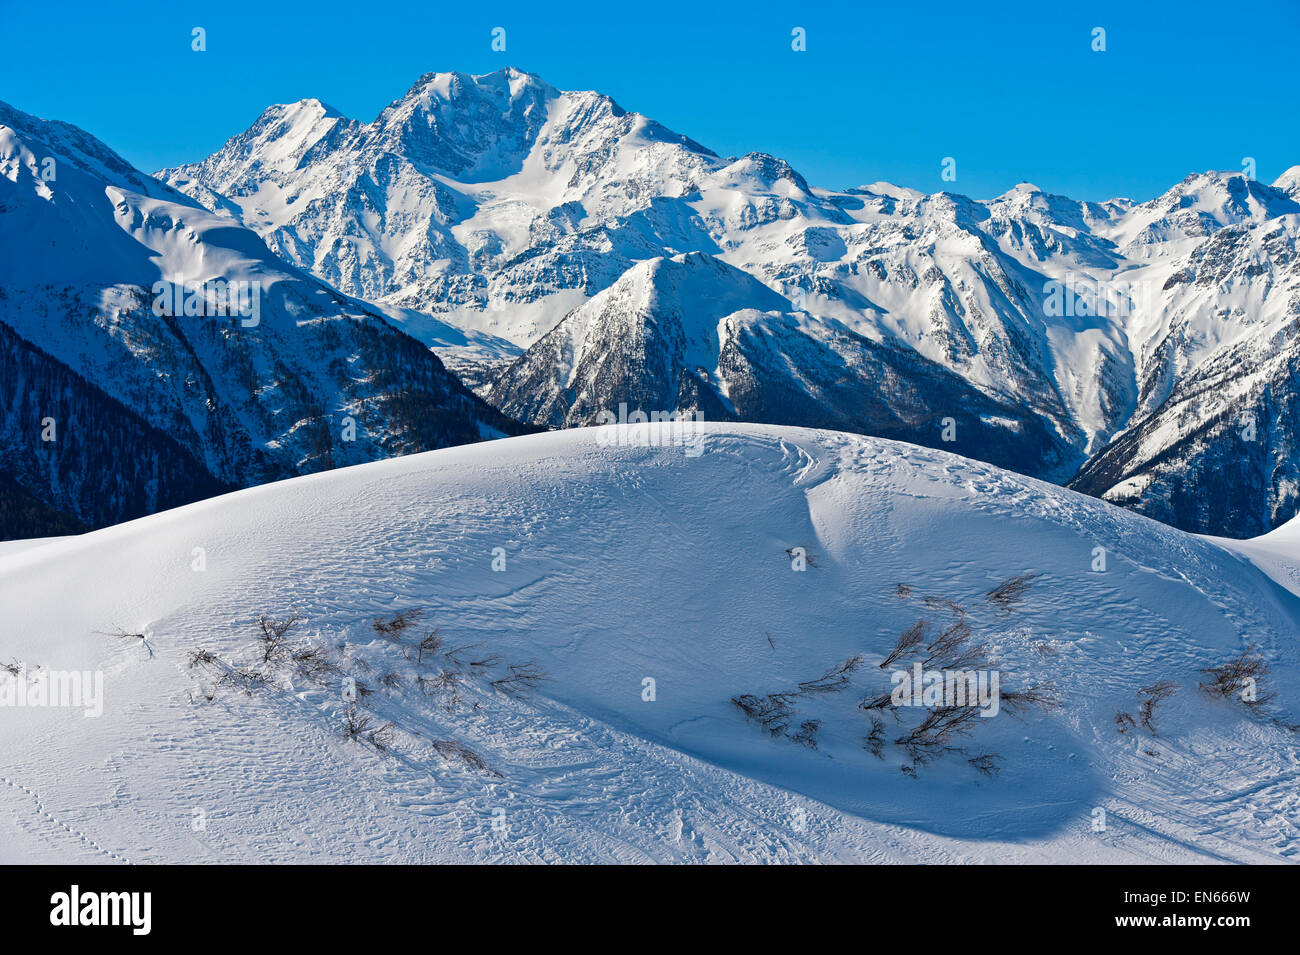 View from Bettmeralp to the Fletschhorn peak, Bettmeralp, Valais, Switzerland Stock Photo